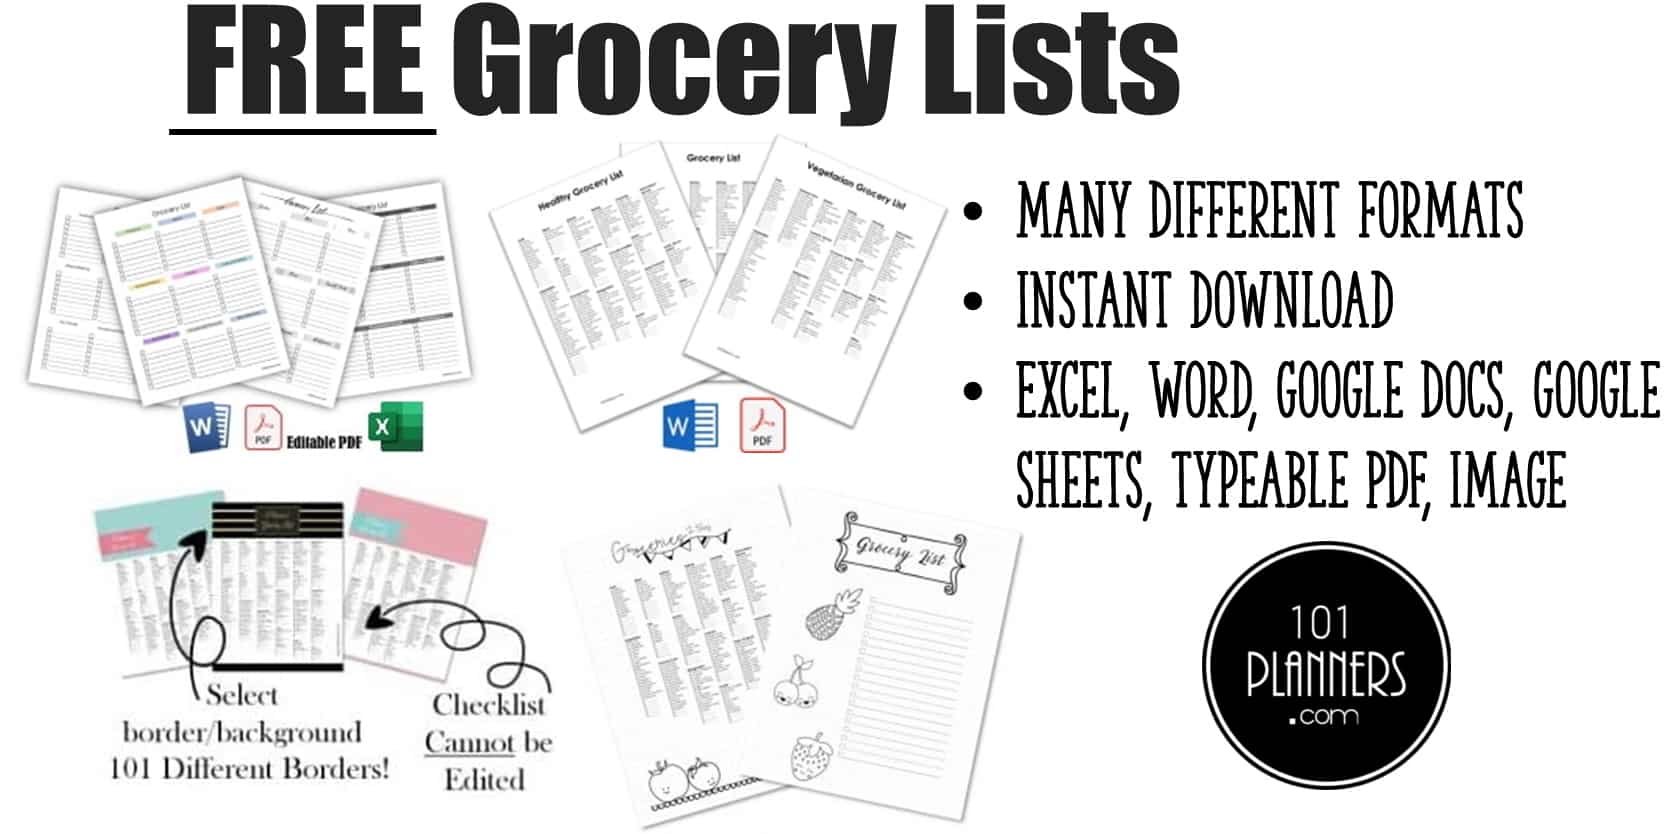 https://www.101planners.com/wp-content/uploads/2016/09/grocery-list-template.jpg